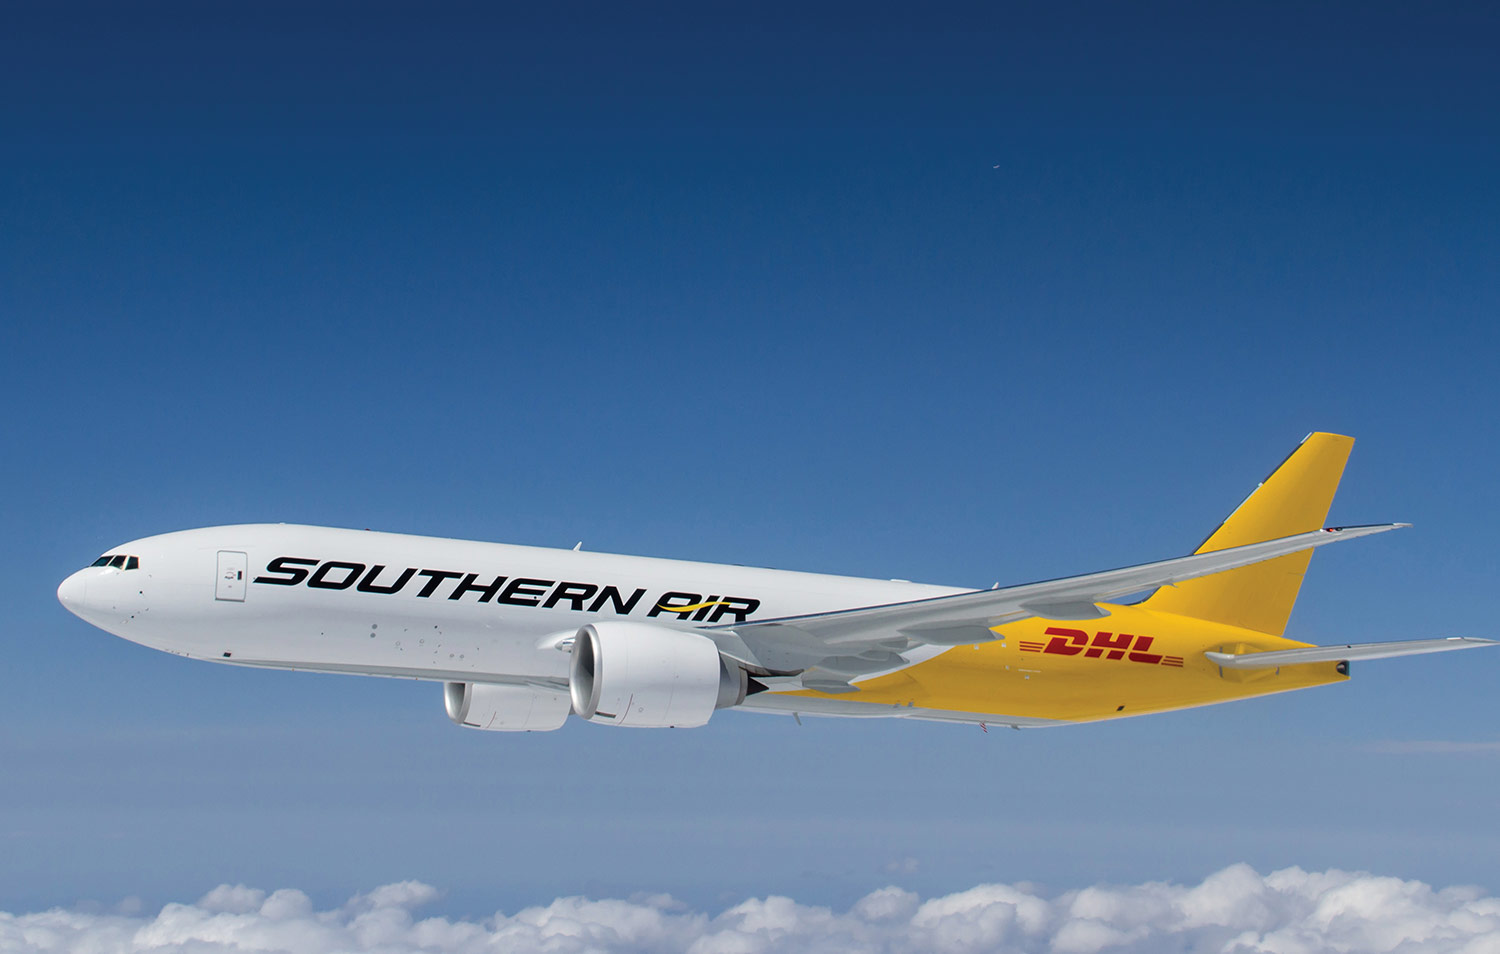 Southern Air Inc